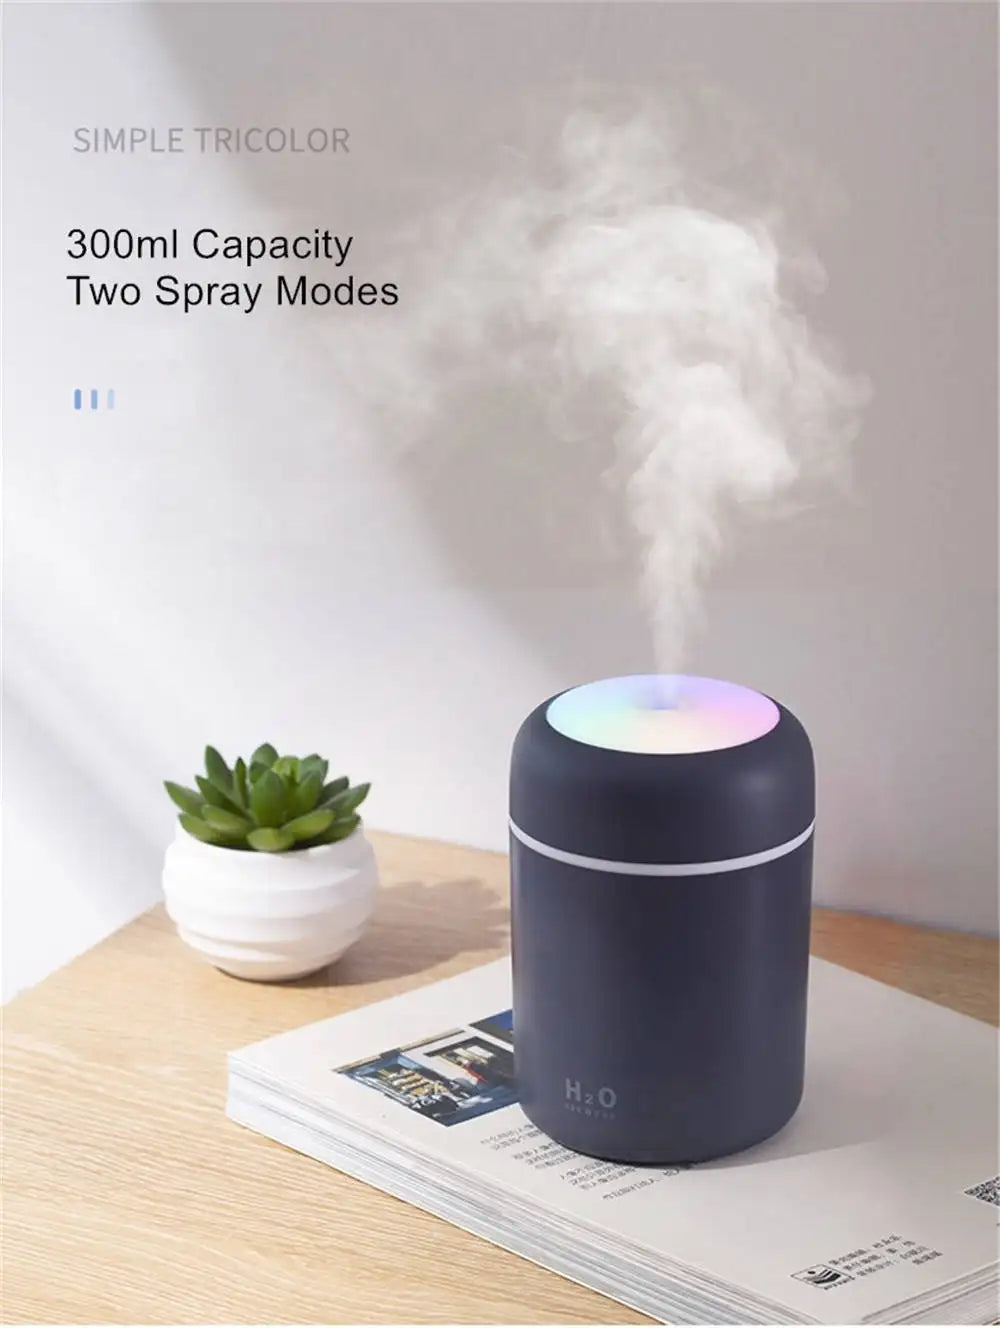 H2O Air Humidifier and Aroma diffuser